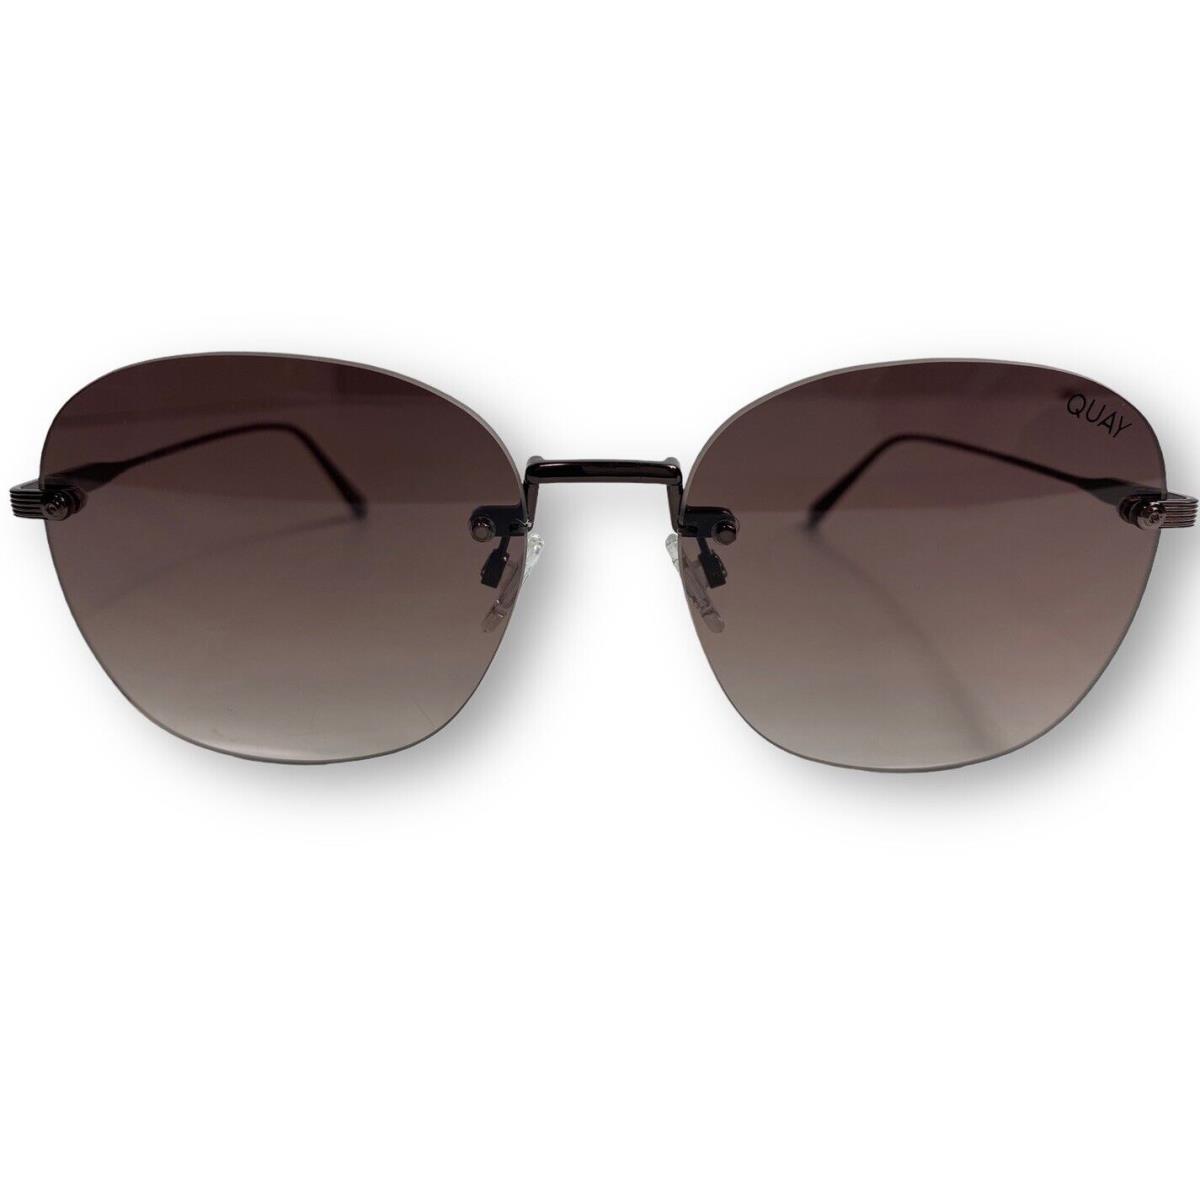 Quay Australia Sunglasses Retro 90 s Style Jezabell Chocolate/brown Lens Rimless